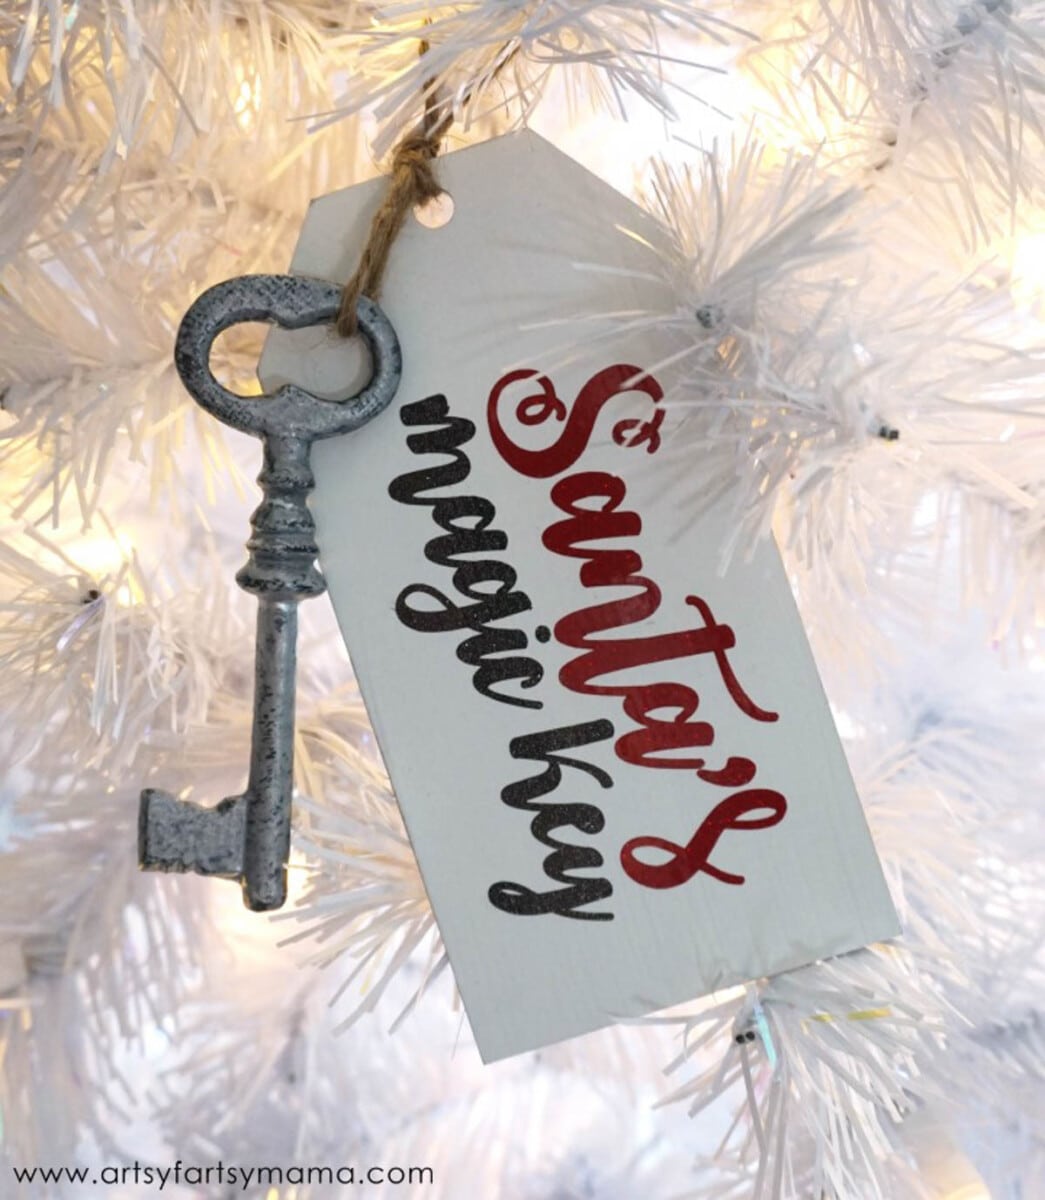 Cricut Christmas ornament in the shape of a gift tag with a key "Santa's magic key"